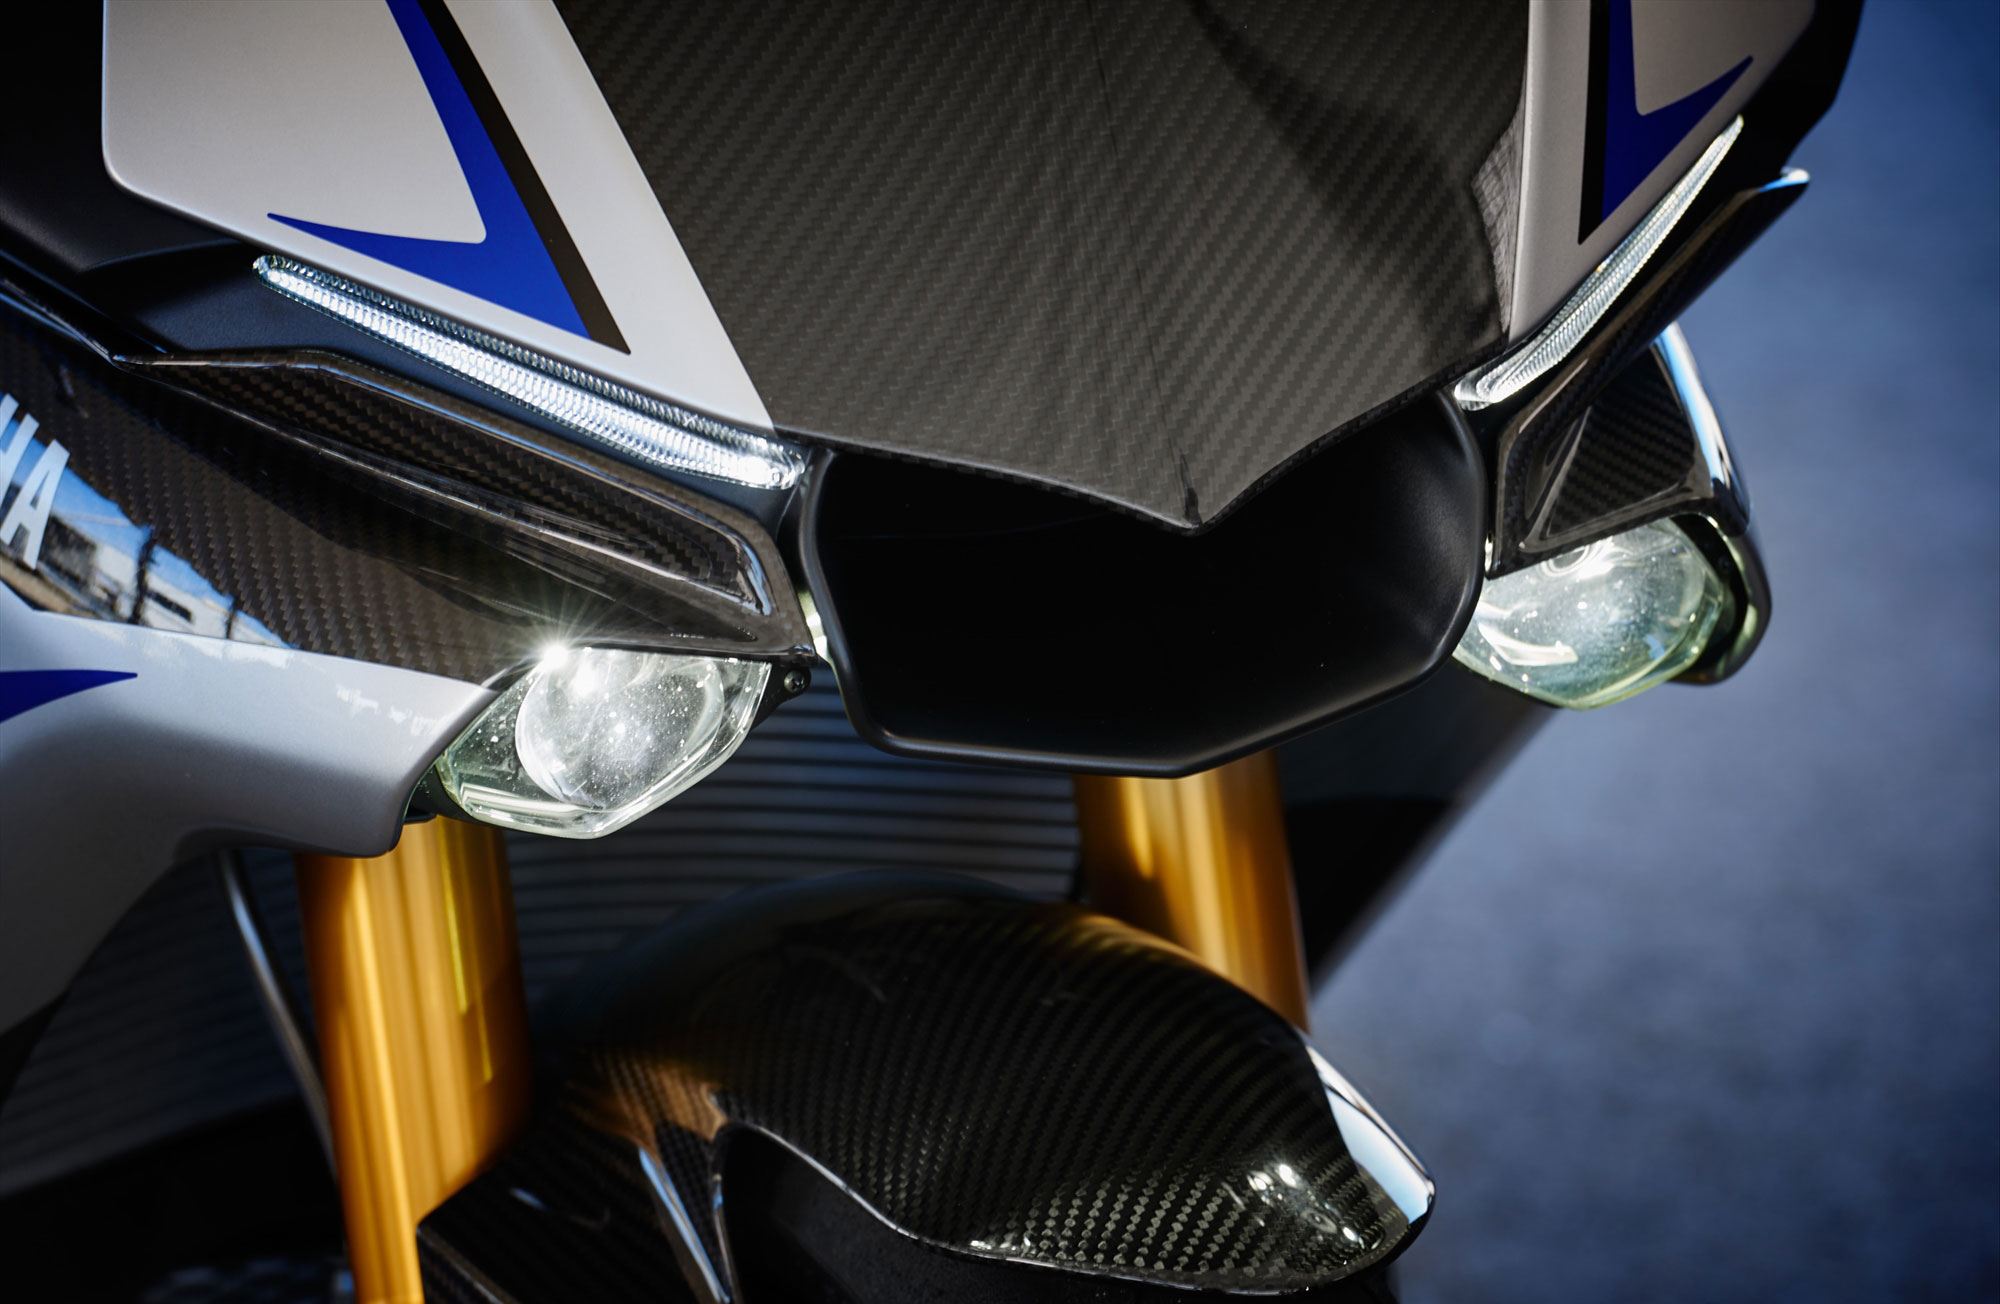 Yamaha YZF R1M 2015 Front HeadLight View